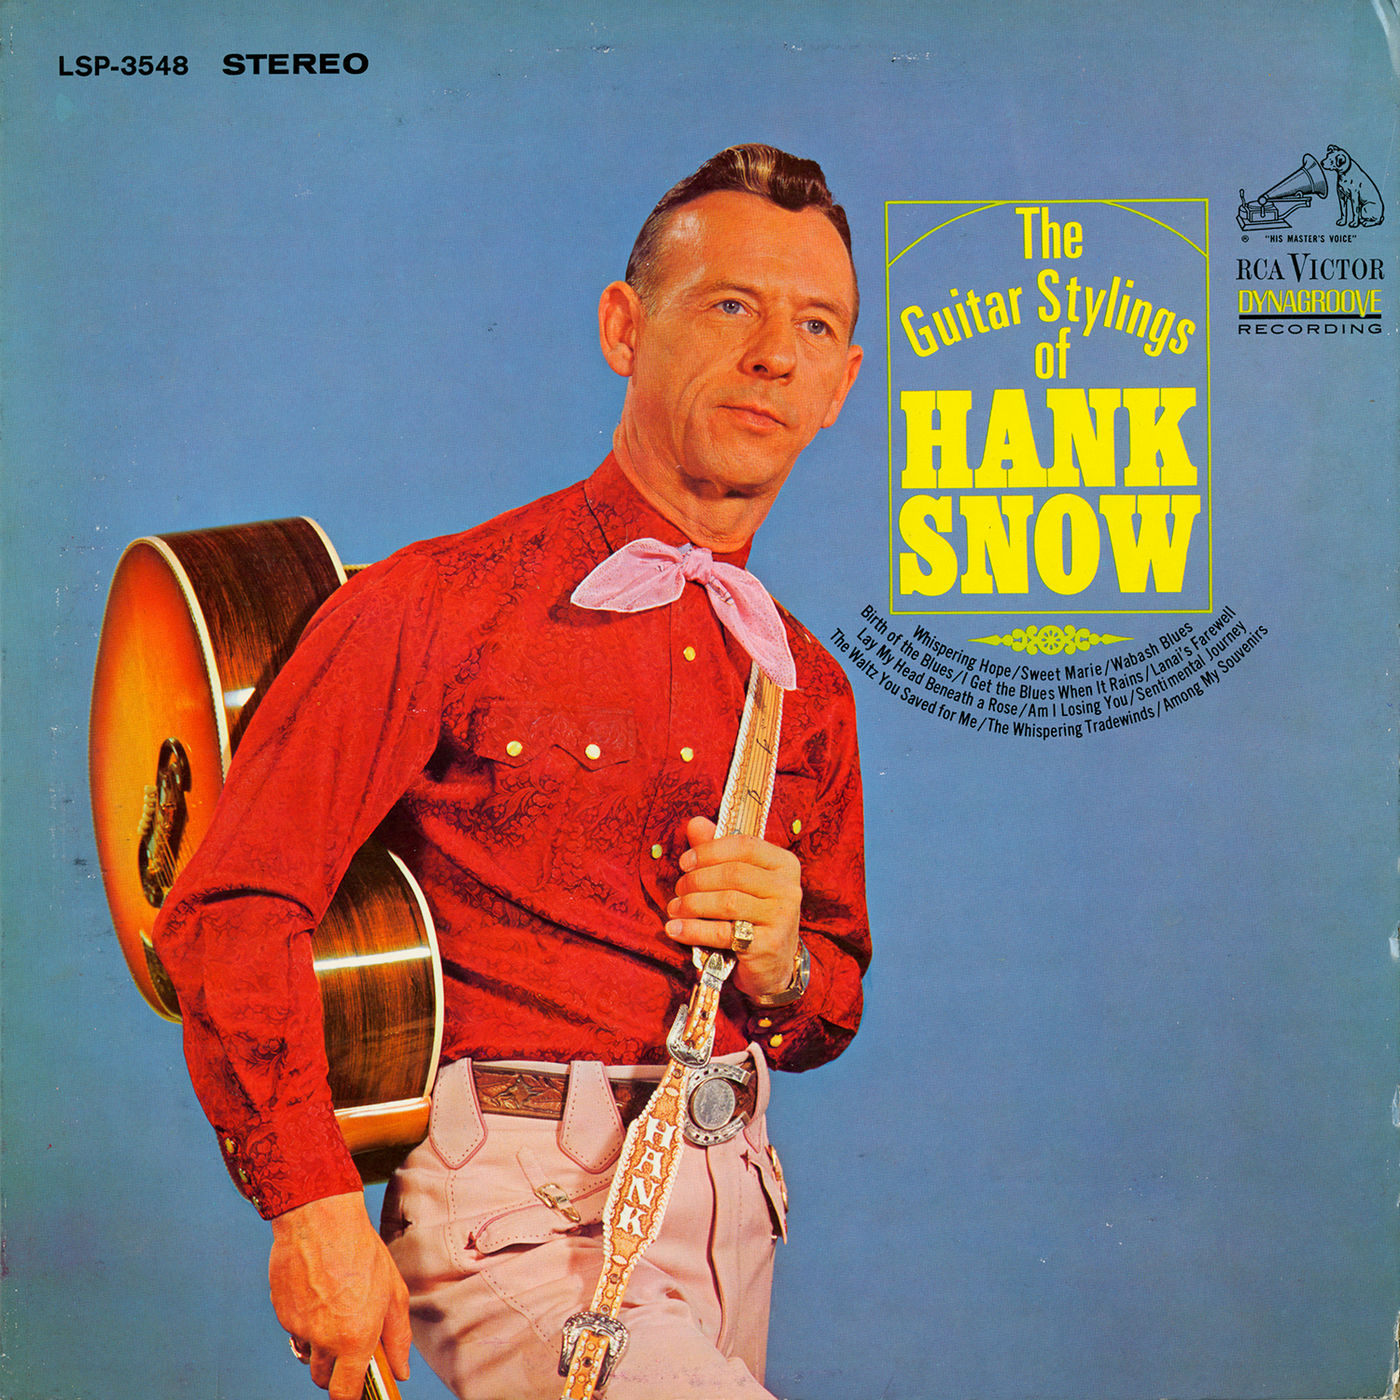 Hank Snow – The Guitar Stylings of Hank Snow